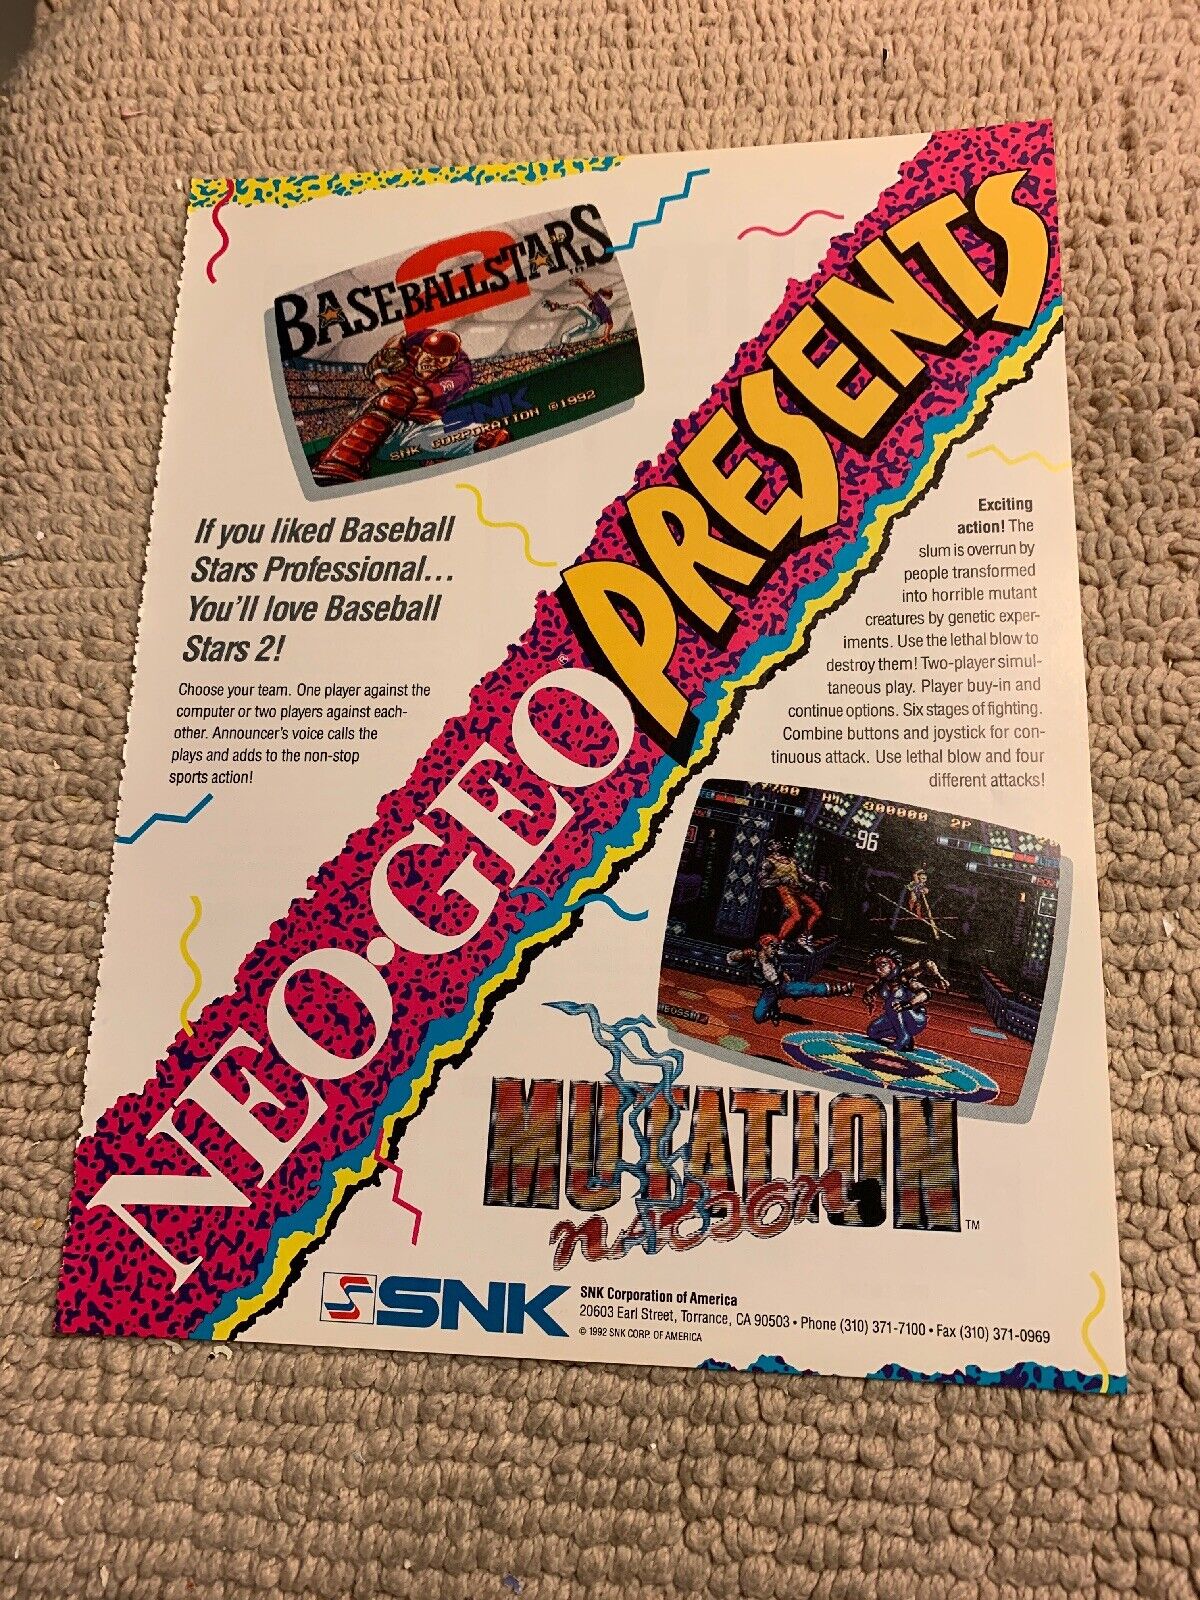 11-8 1/4” Baseball Stars Mutation Nation Neo Geo Snk arcade video game FLYER AD